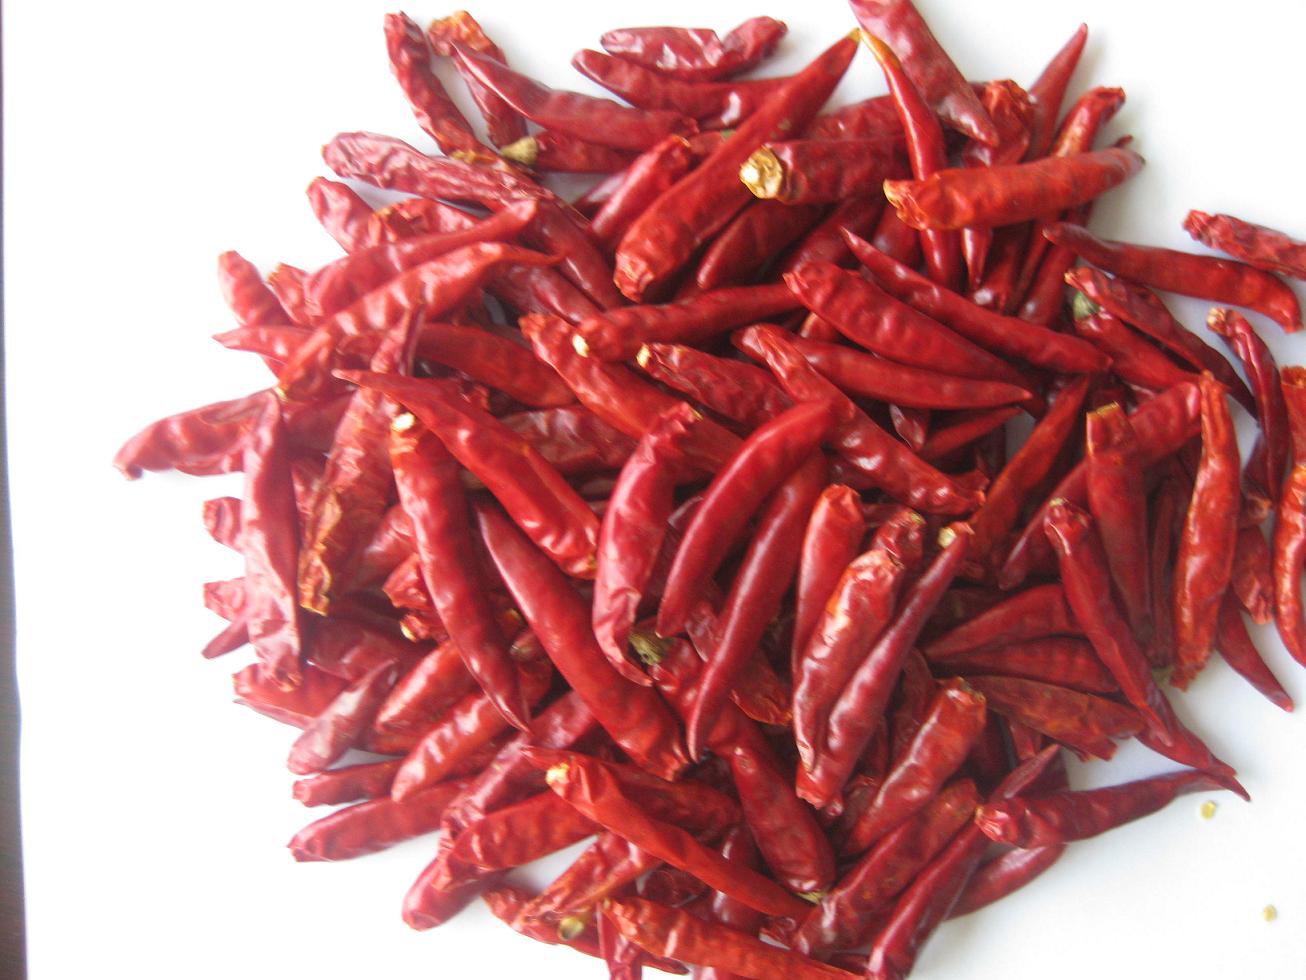 Hot chaoitan chilli